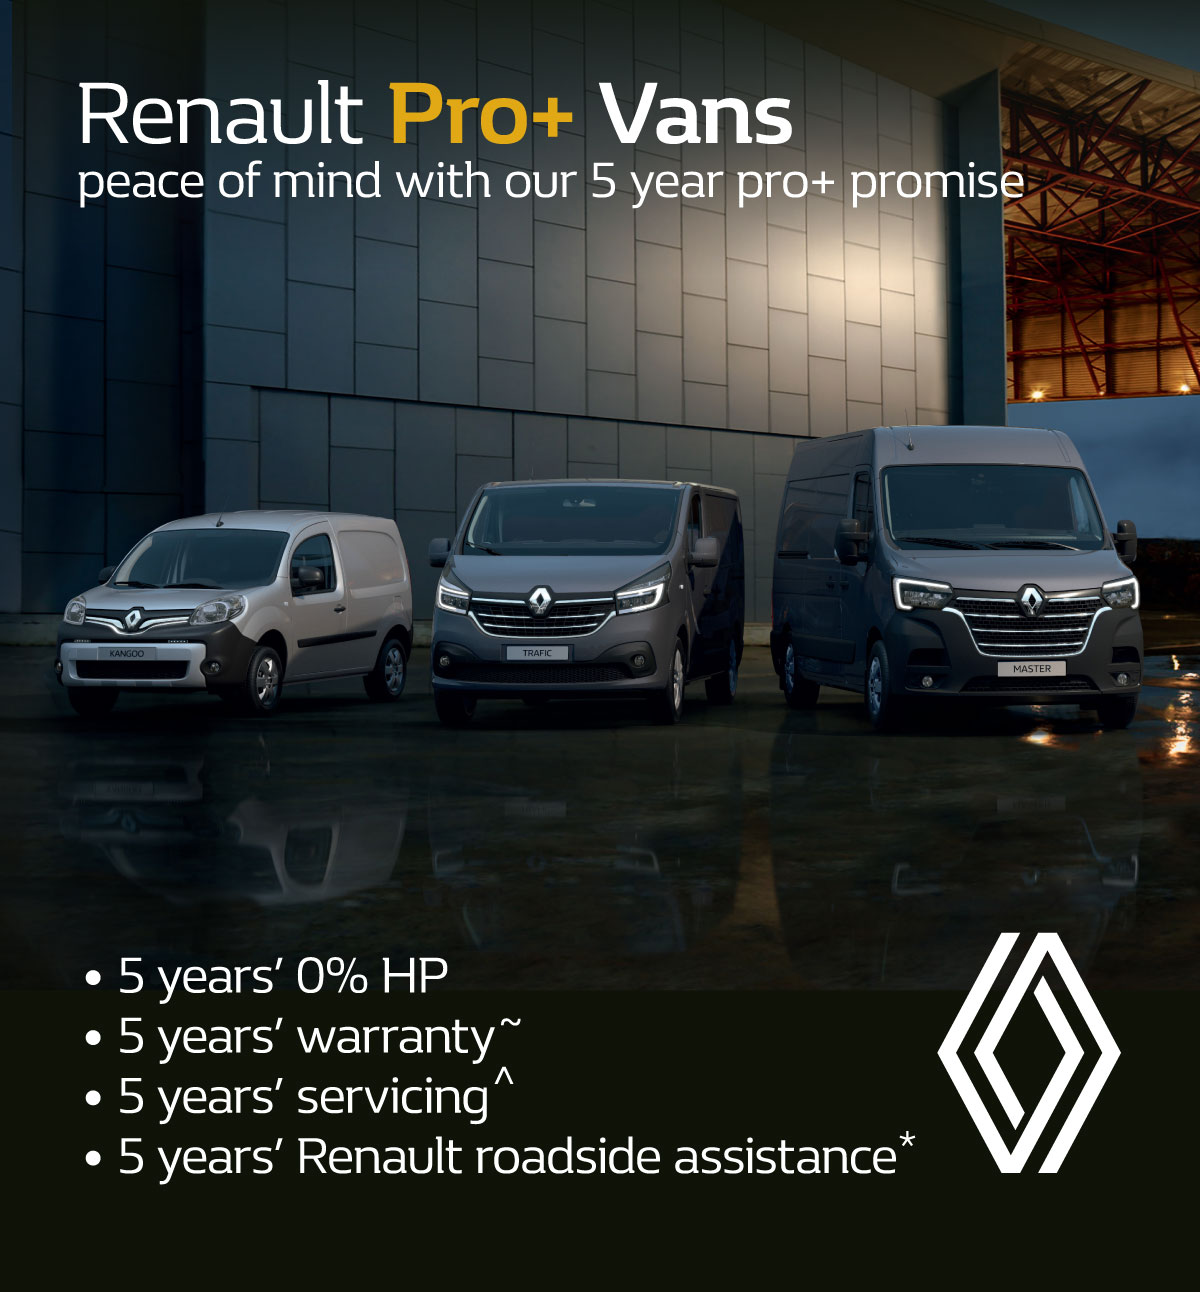 Renault Pro+ Vans 5 Year Promise